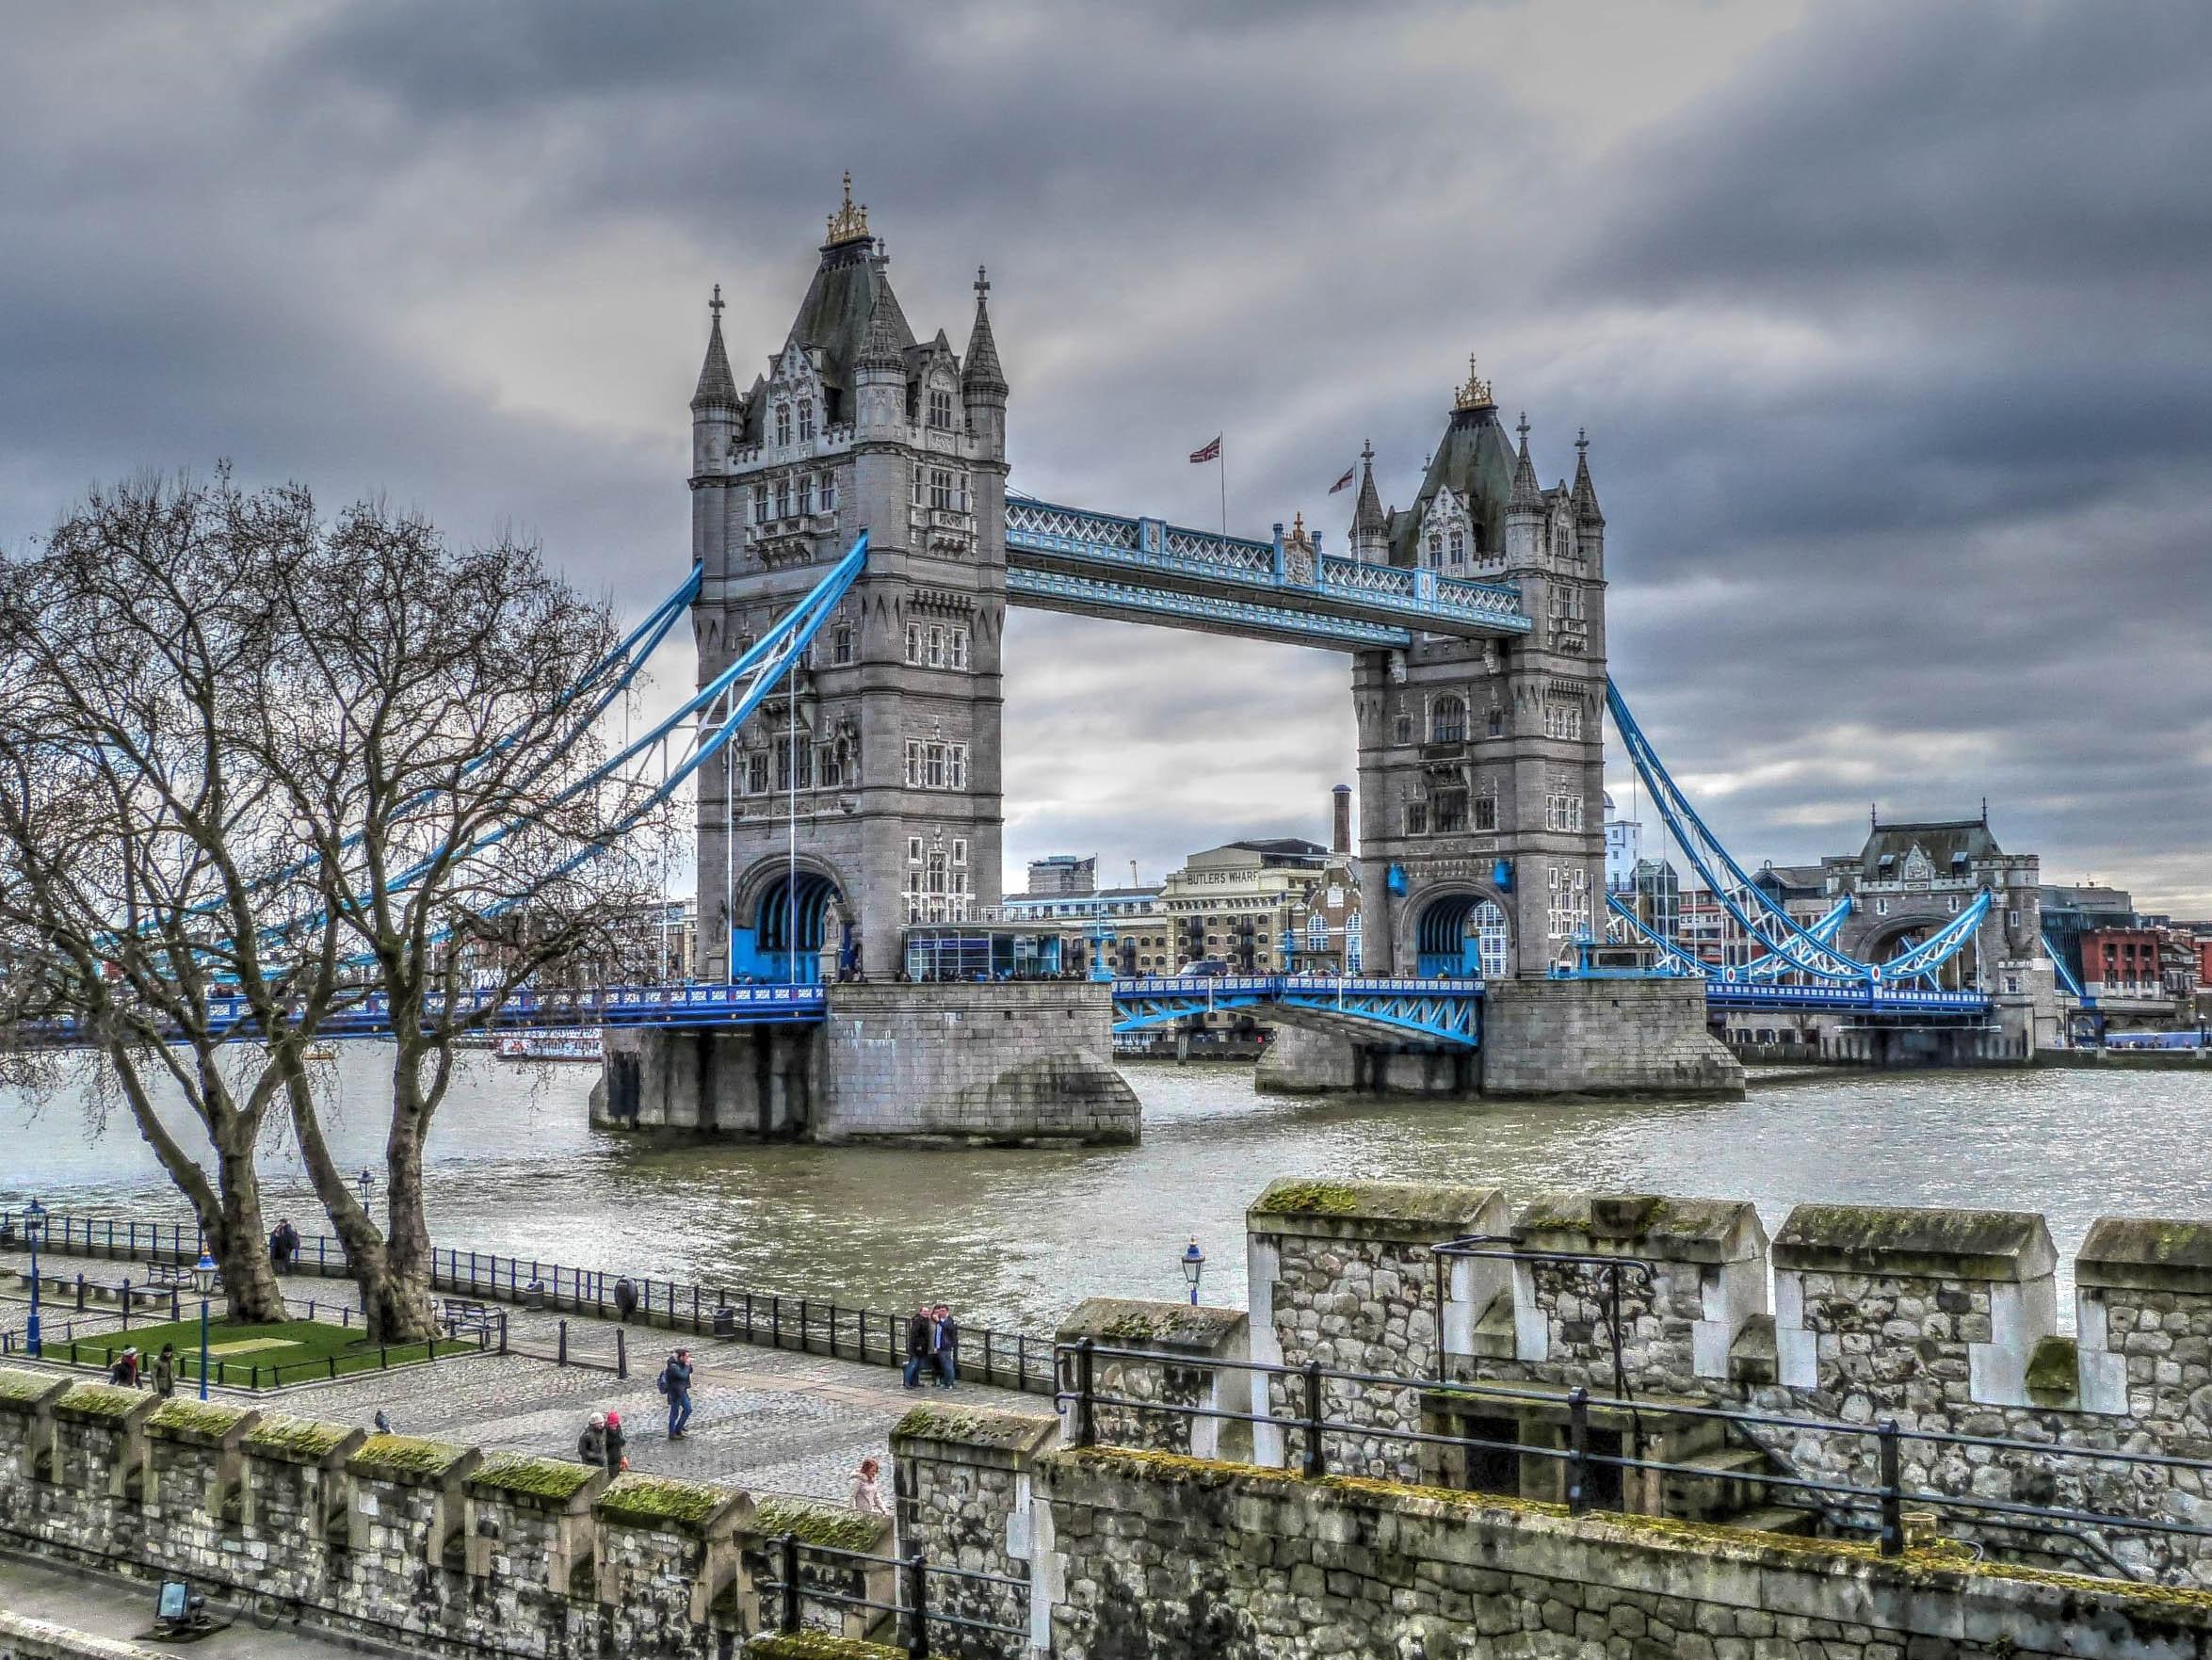 London - UK - 1nikah Photo by John Smith: https://www.pexels.com/photo/tower-bridge-726484/